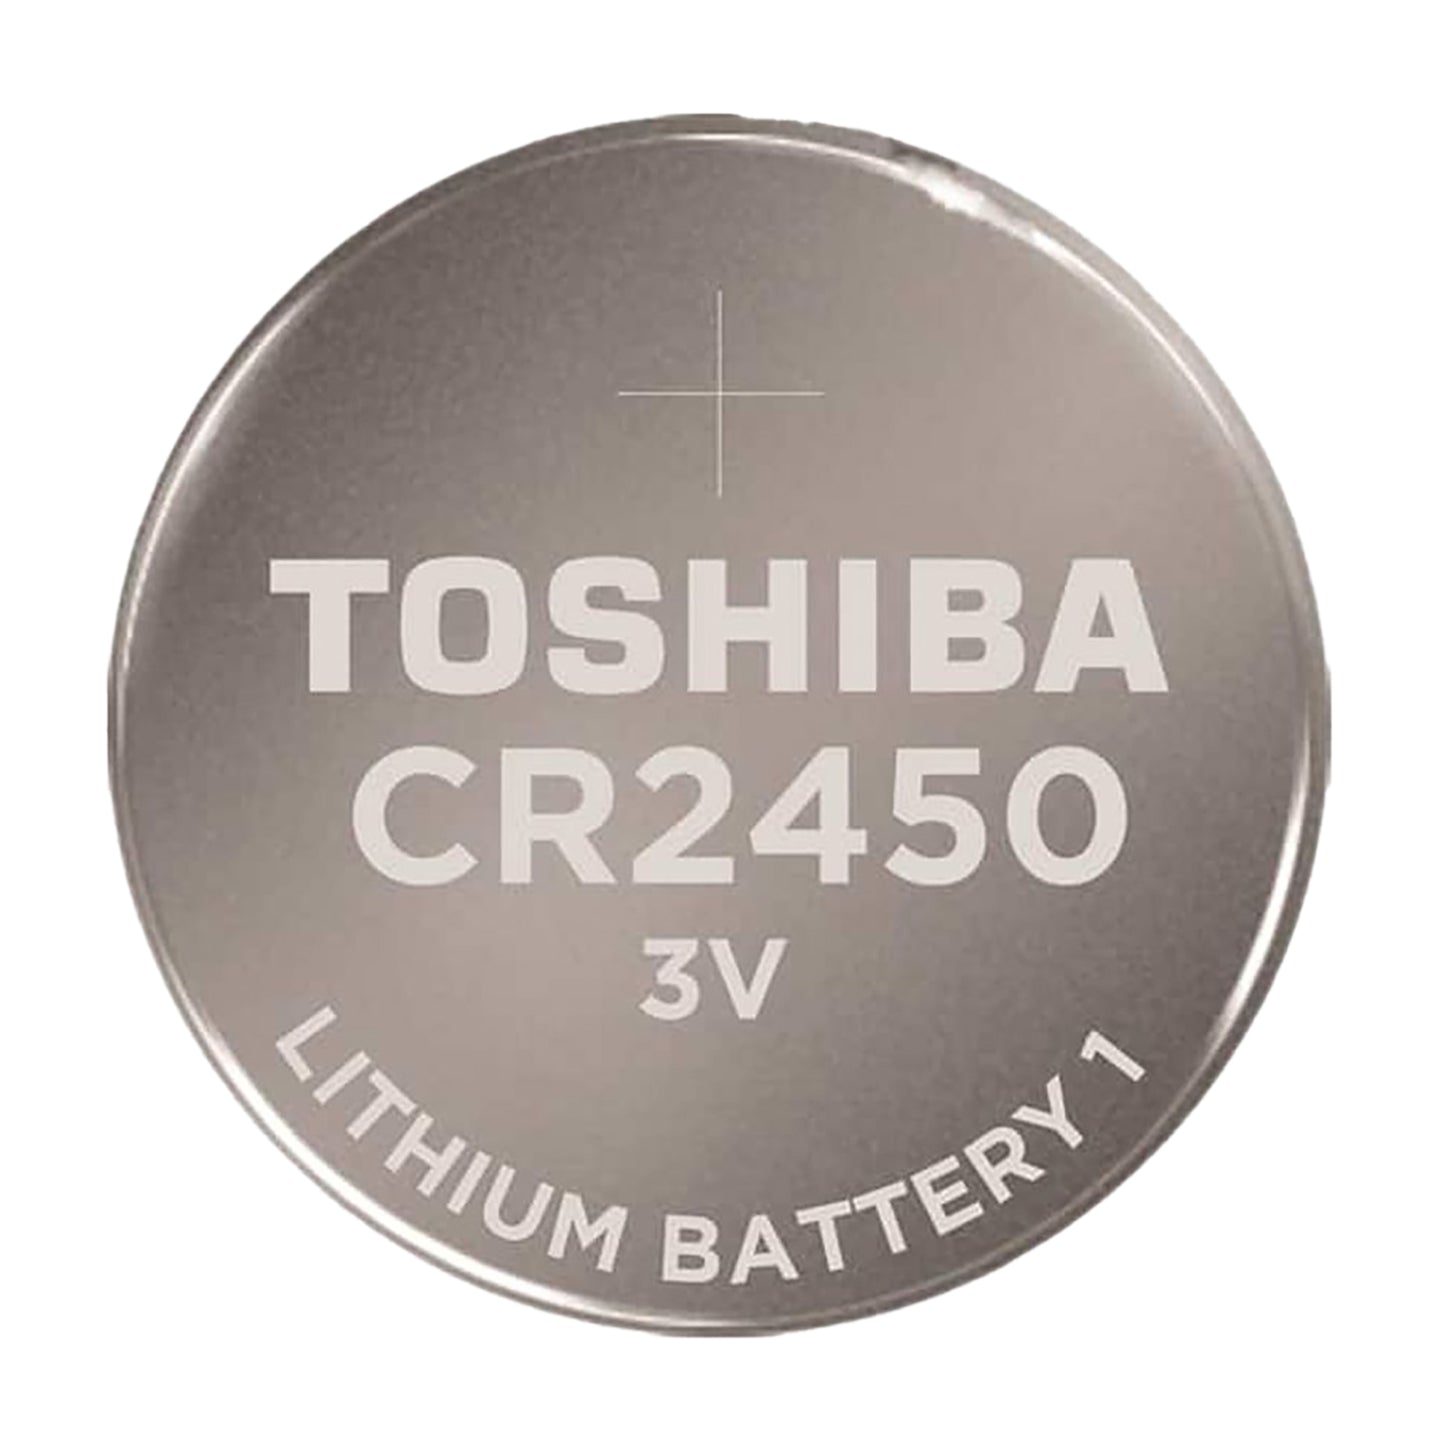 TSH-CR2450-1 - дисковая батарейка Toshiba CR2450, 3 В (1 шт. в блистере)